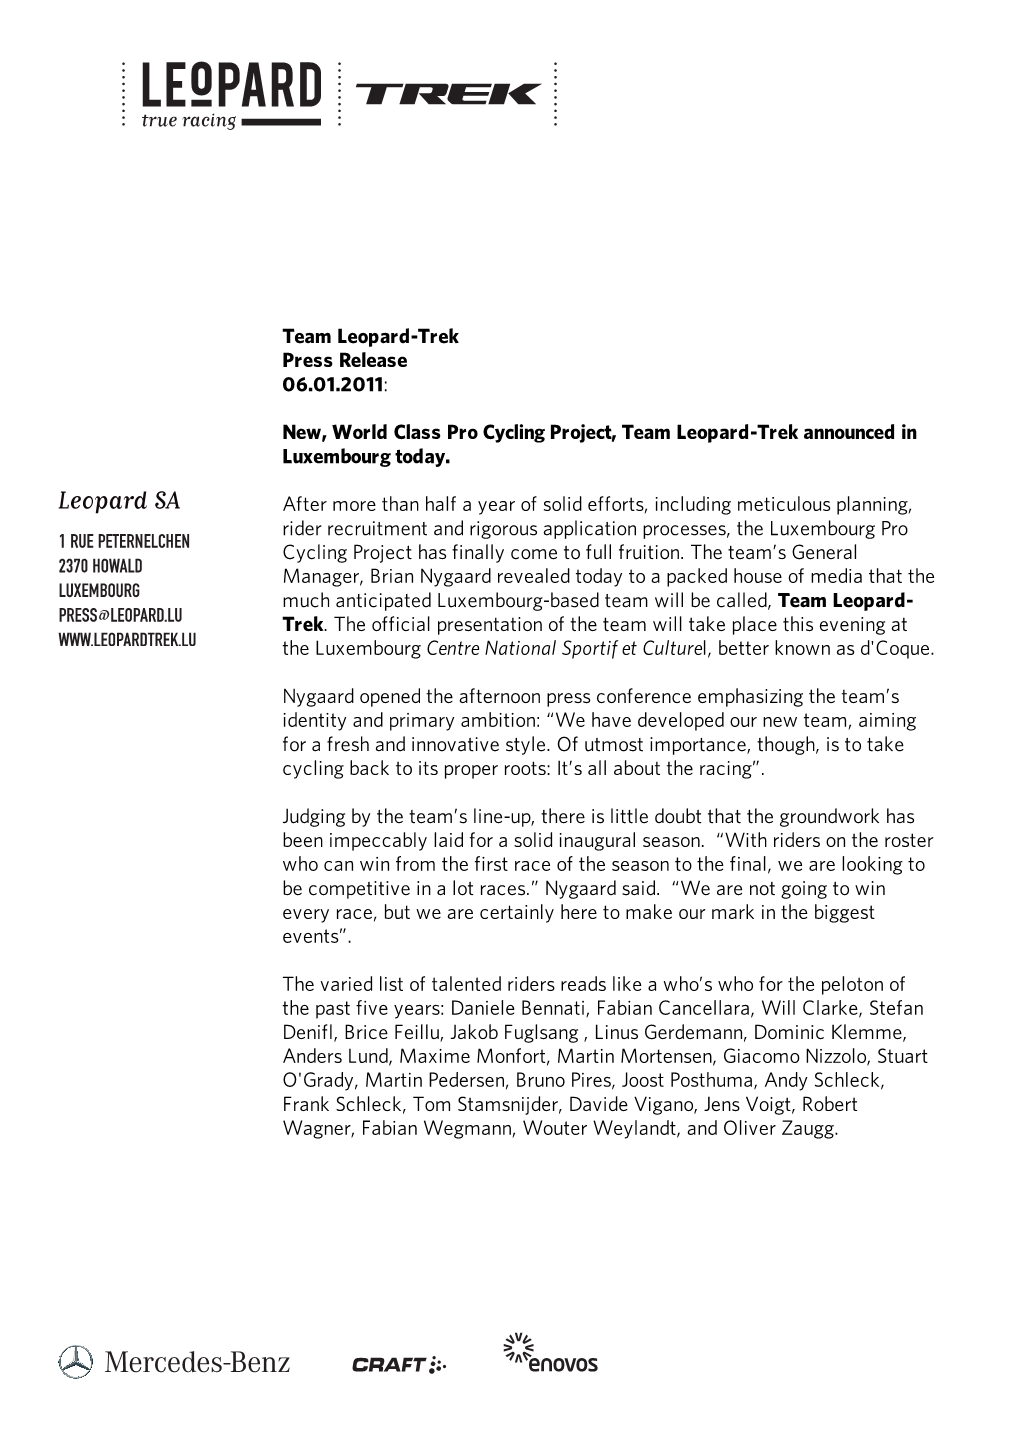 Team Leopard-Trek Press Release 06.01.2011